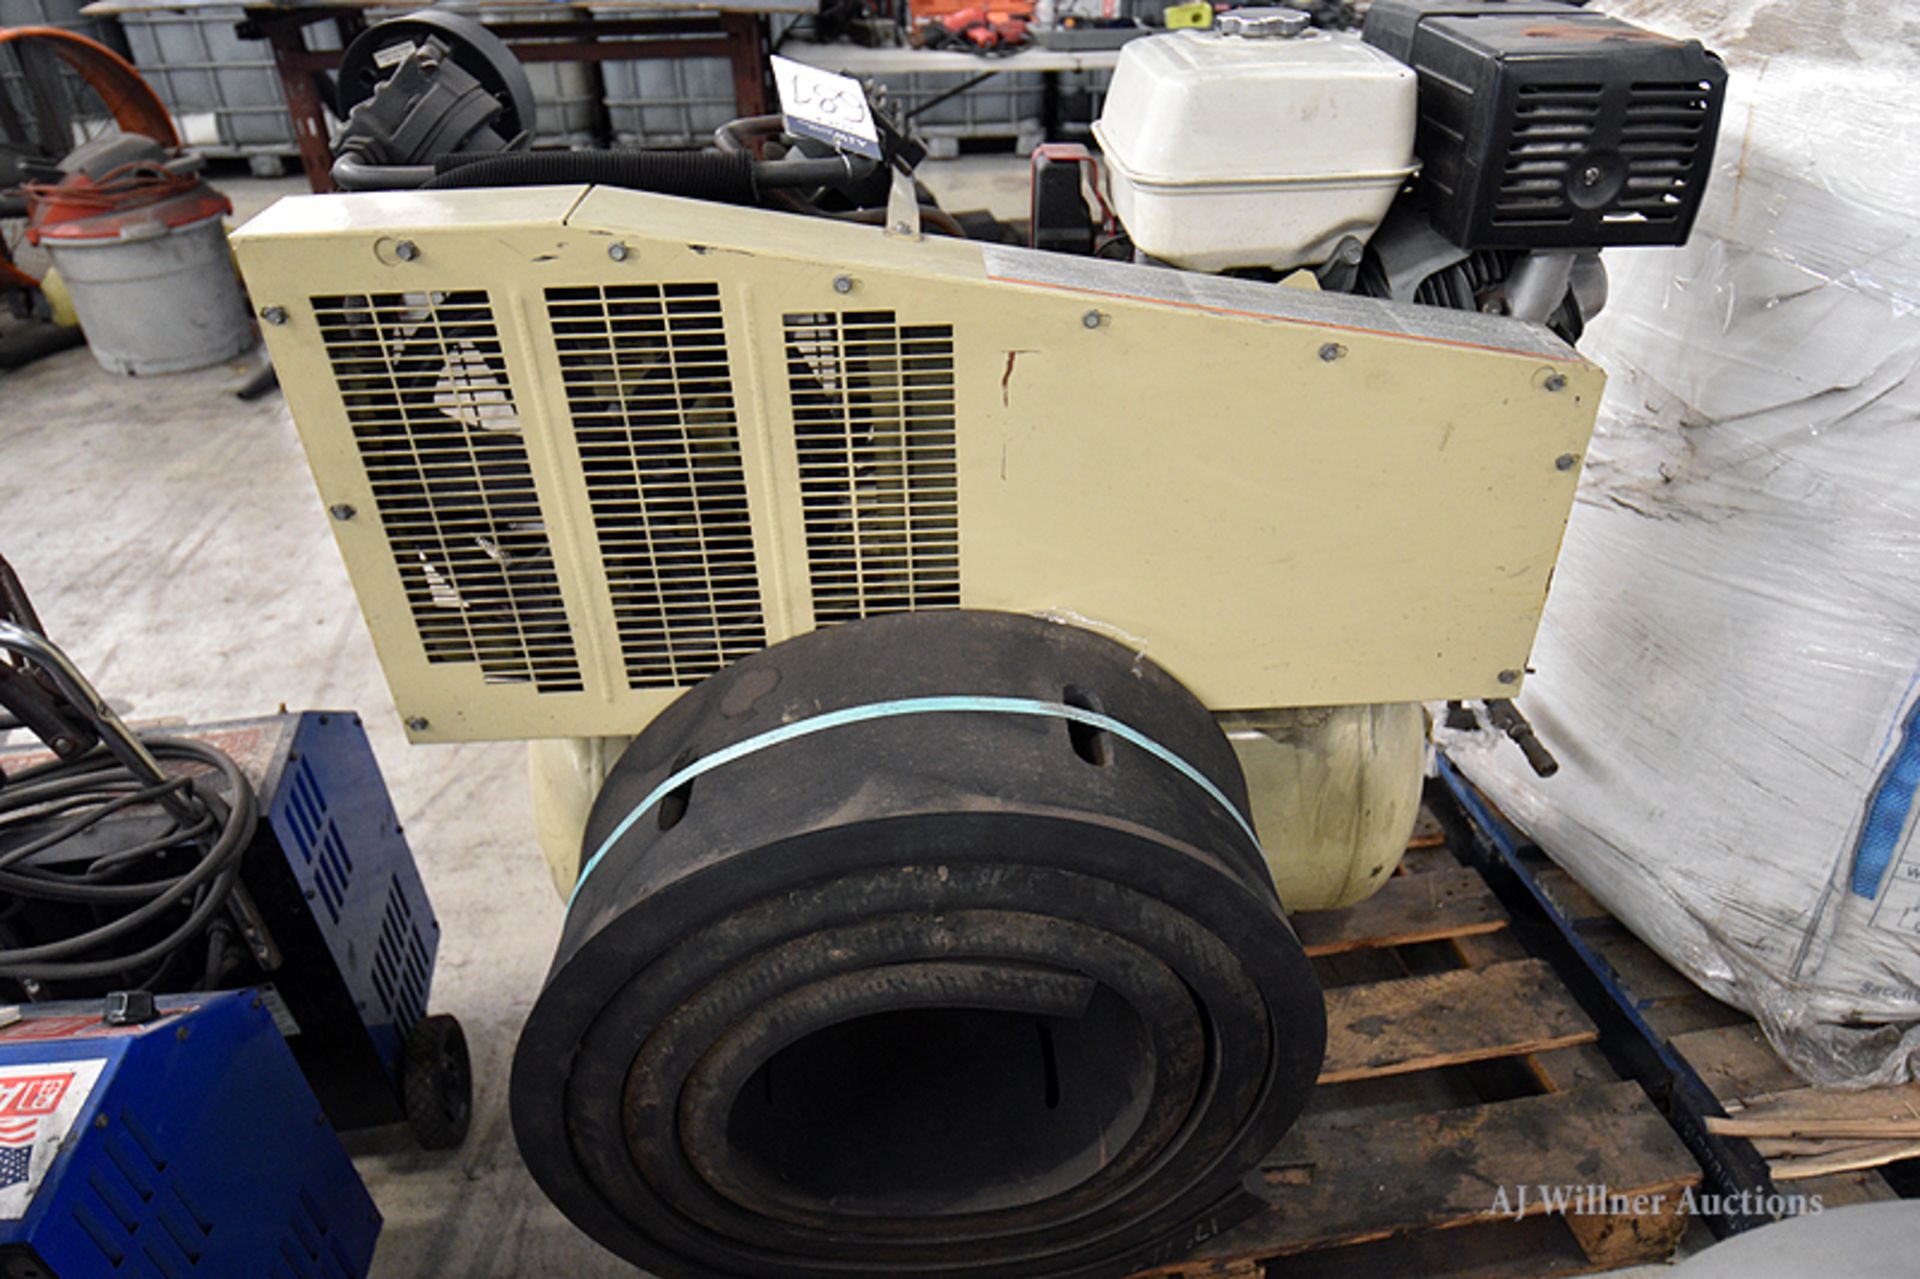 Ingersoll Rand Horizontal Air Compressor 30gal w/ Honda 13hp Engine (gas) Model 2475 sn 5094344 - Image 2 of 2